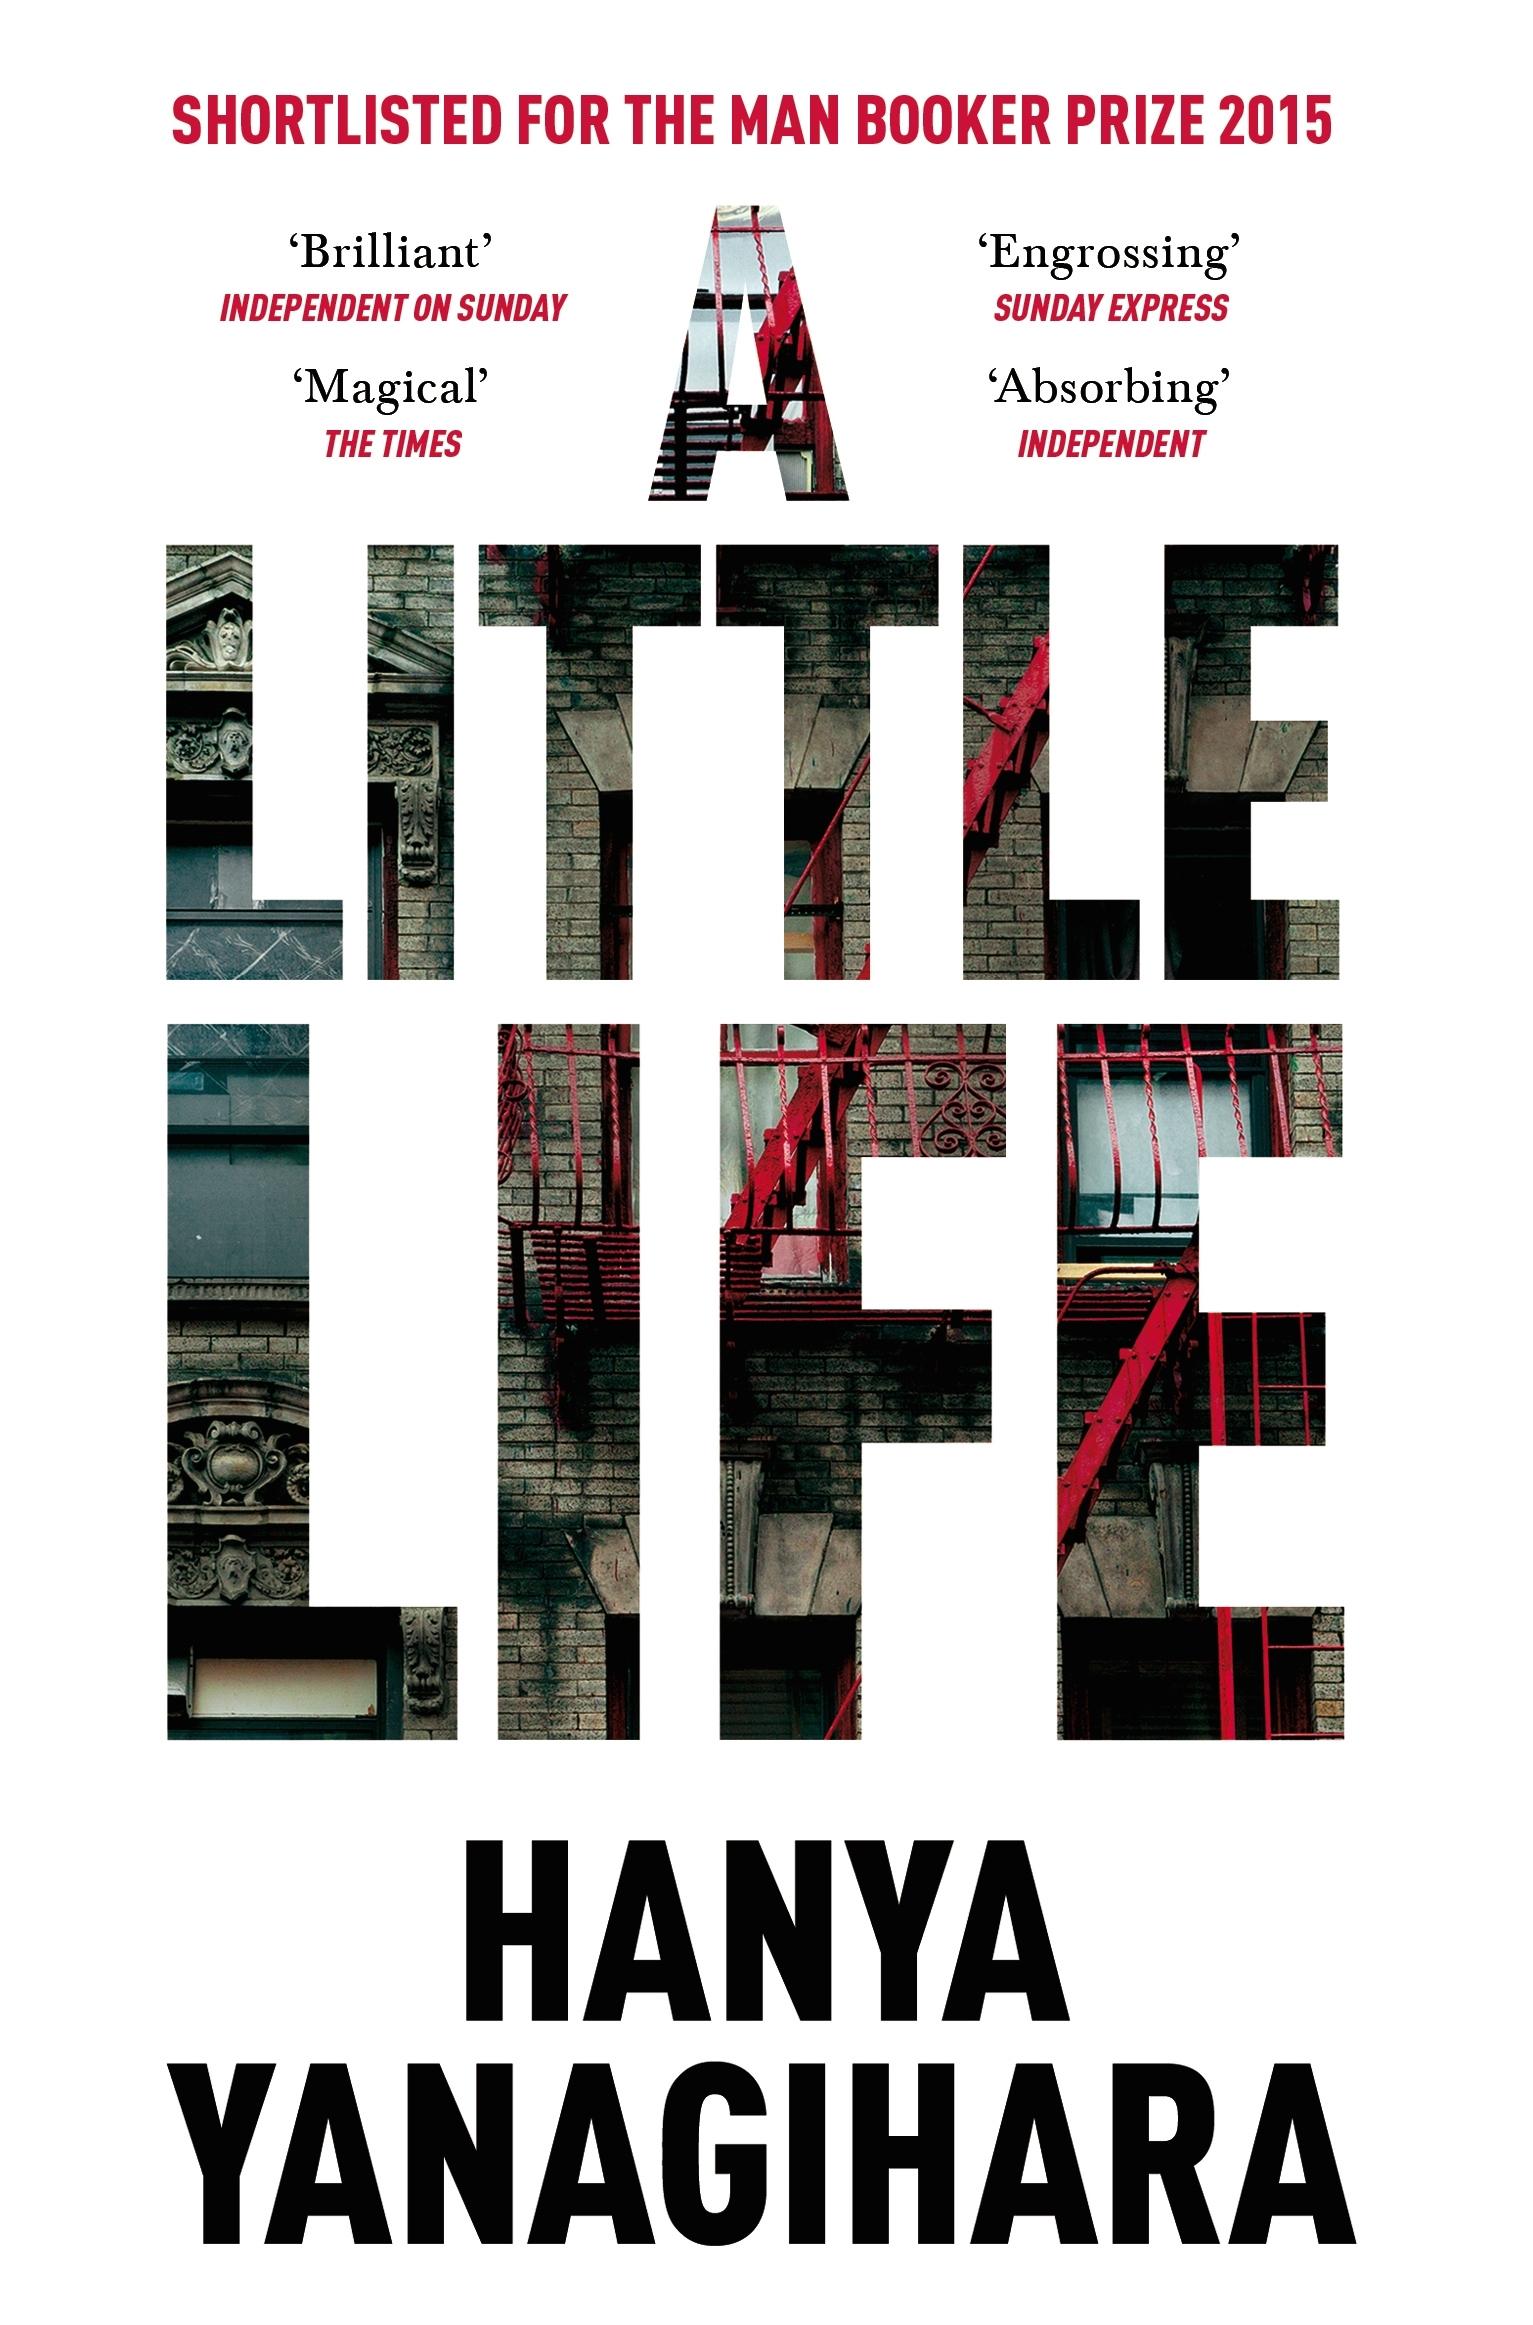 Hanya Yanagihara: Little Life (2015, Pan Macmillan)